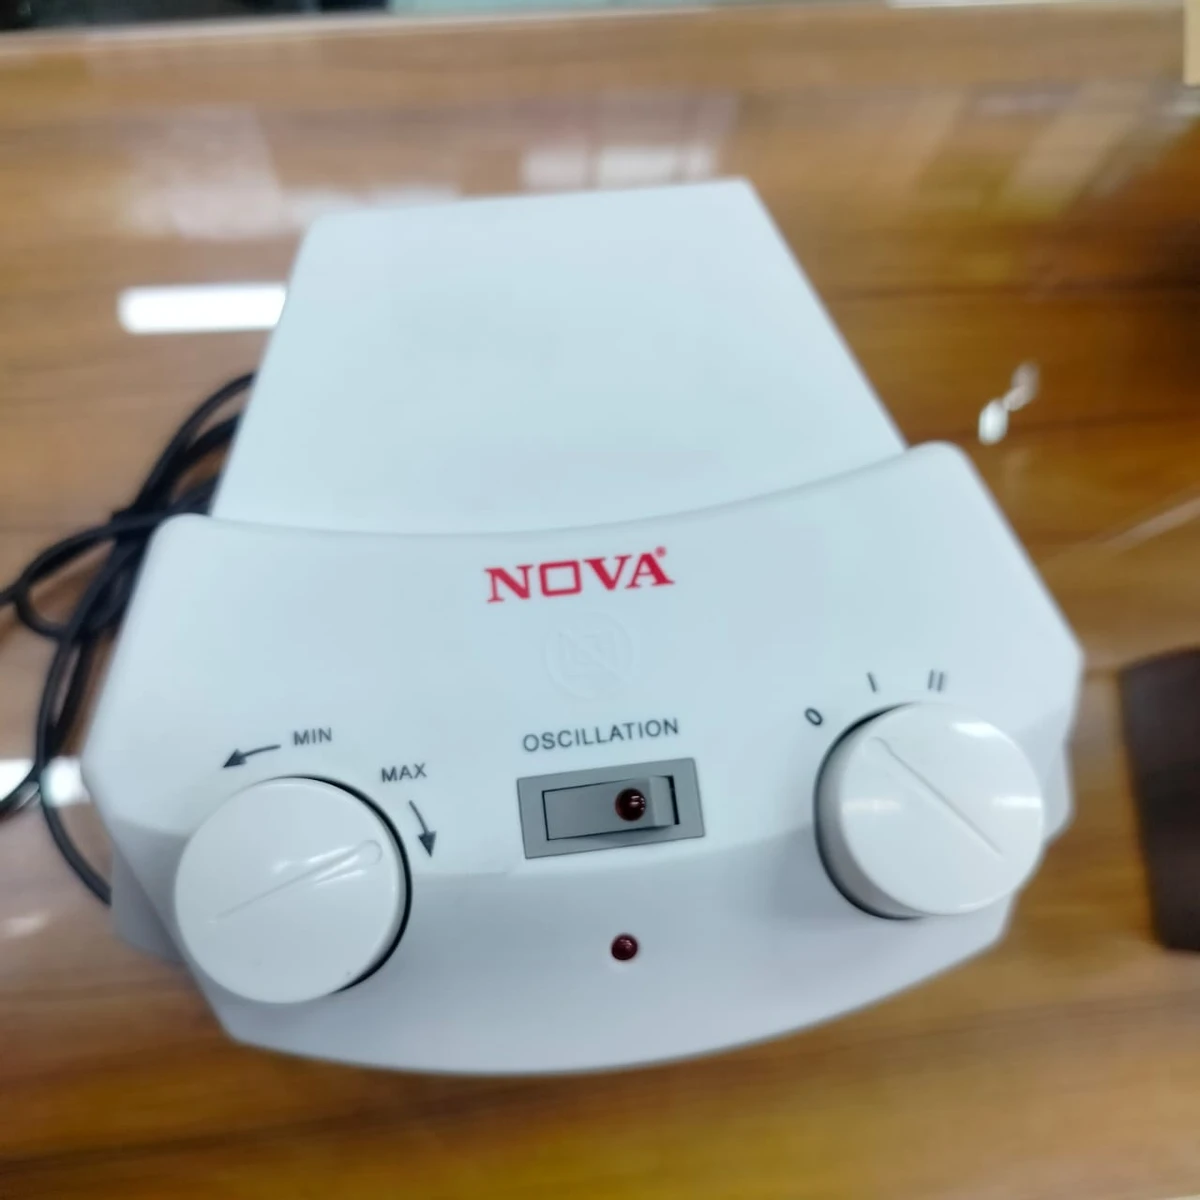 Nova Room Heater NV-4058